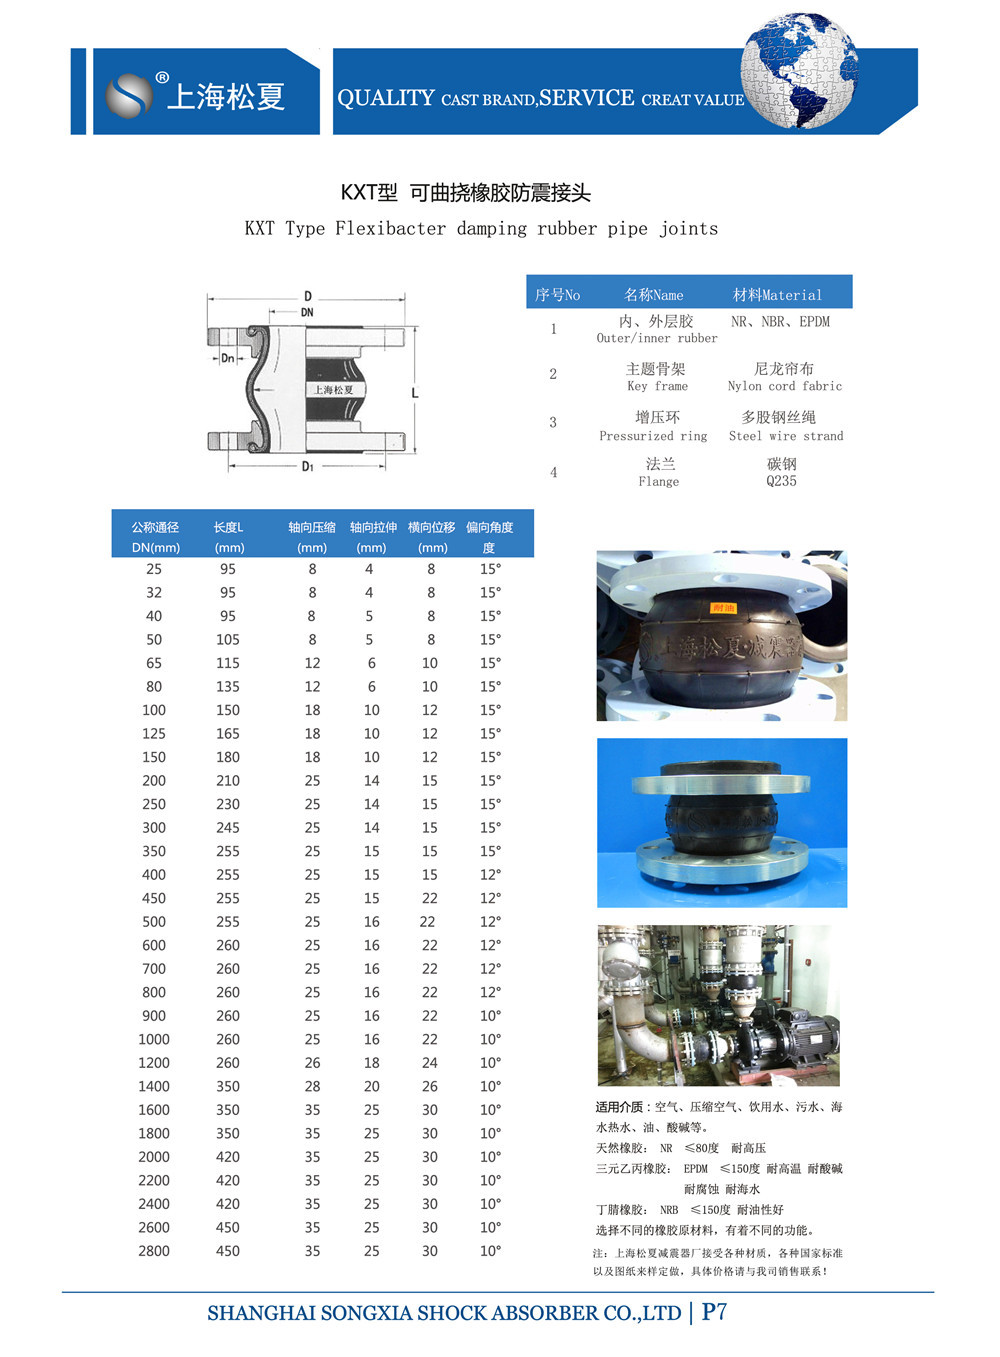 KXT-DN65-1.6Mpa自来水厂管道用不锈钢伸缩节